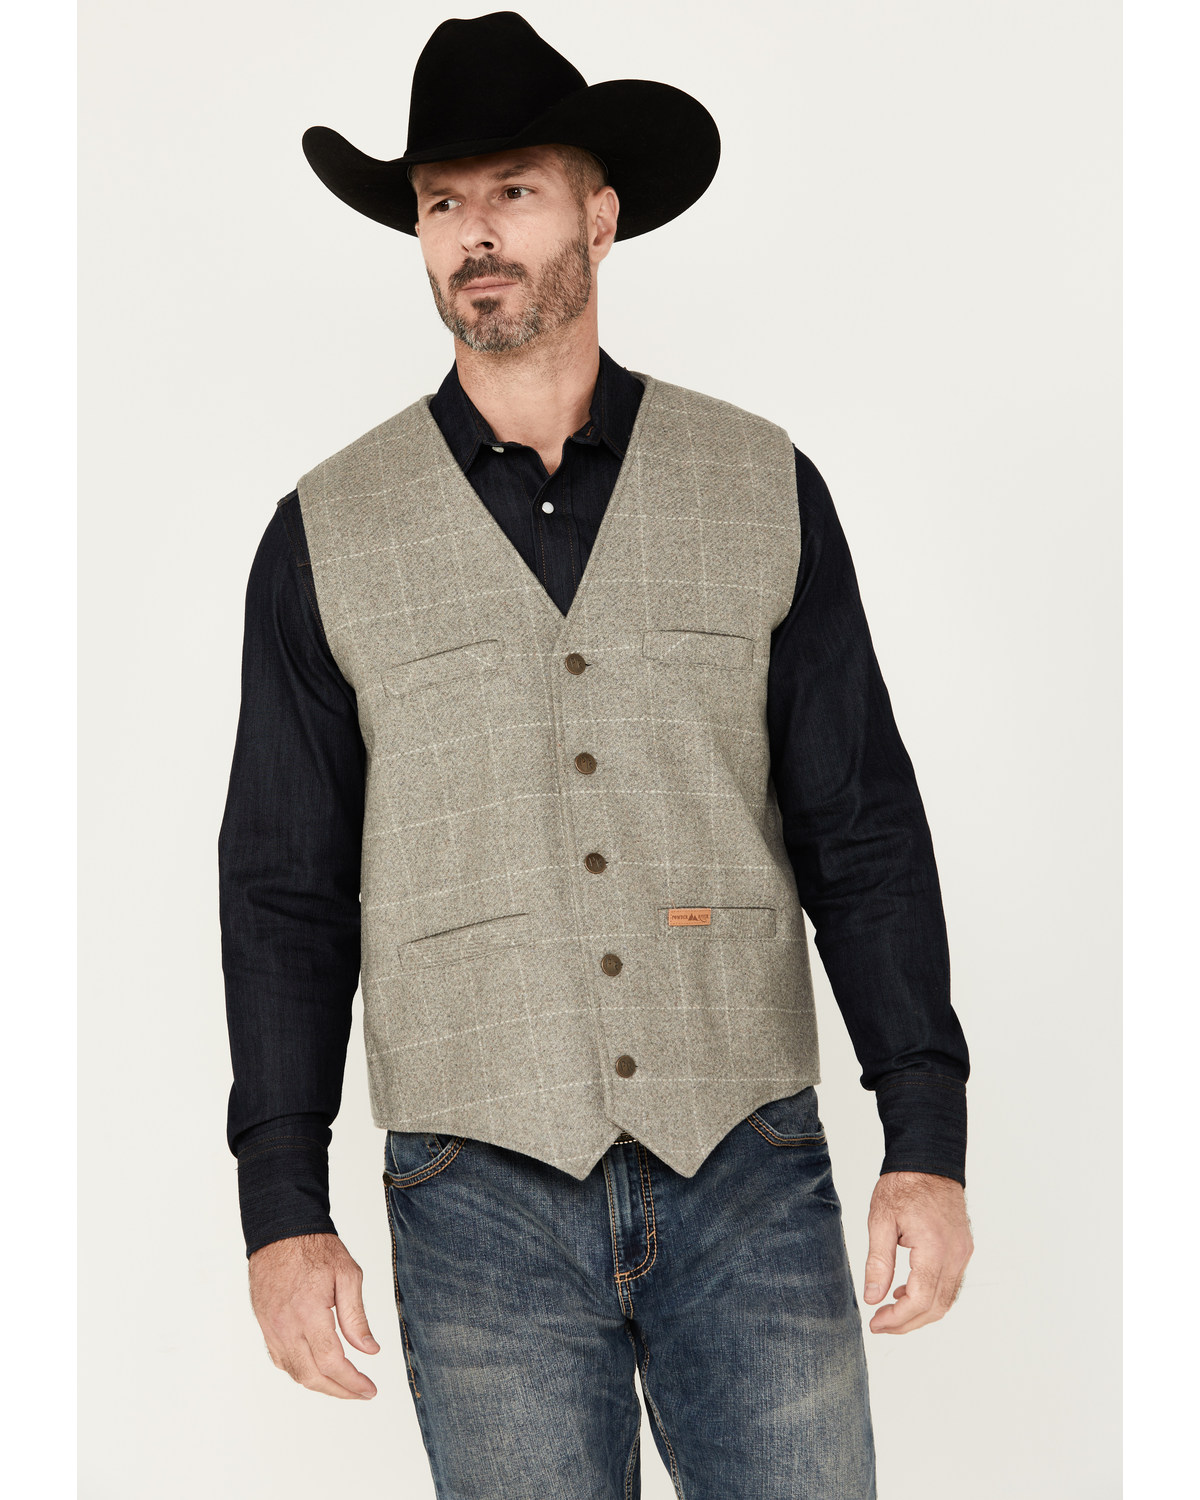 Powder River Outfitters Men's Plaid Print Wool Vest